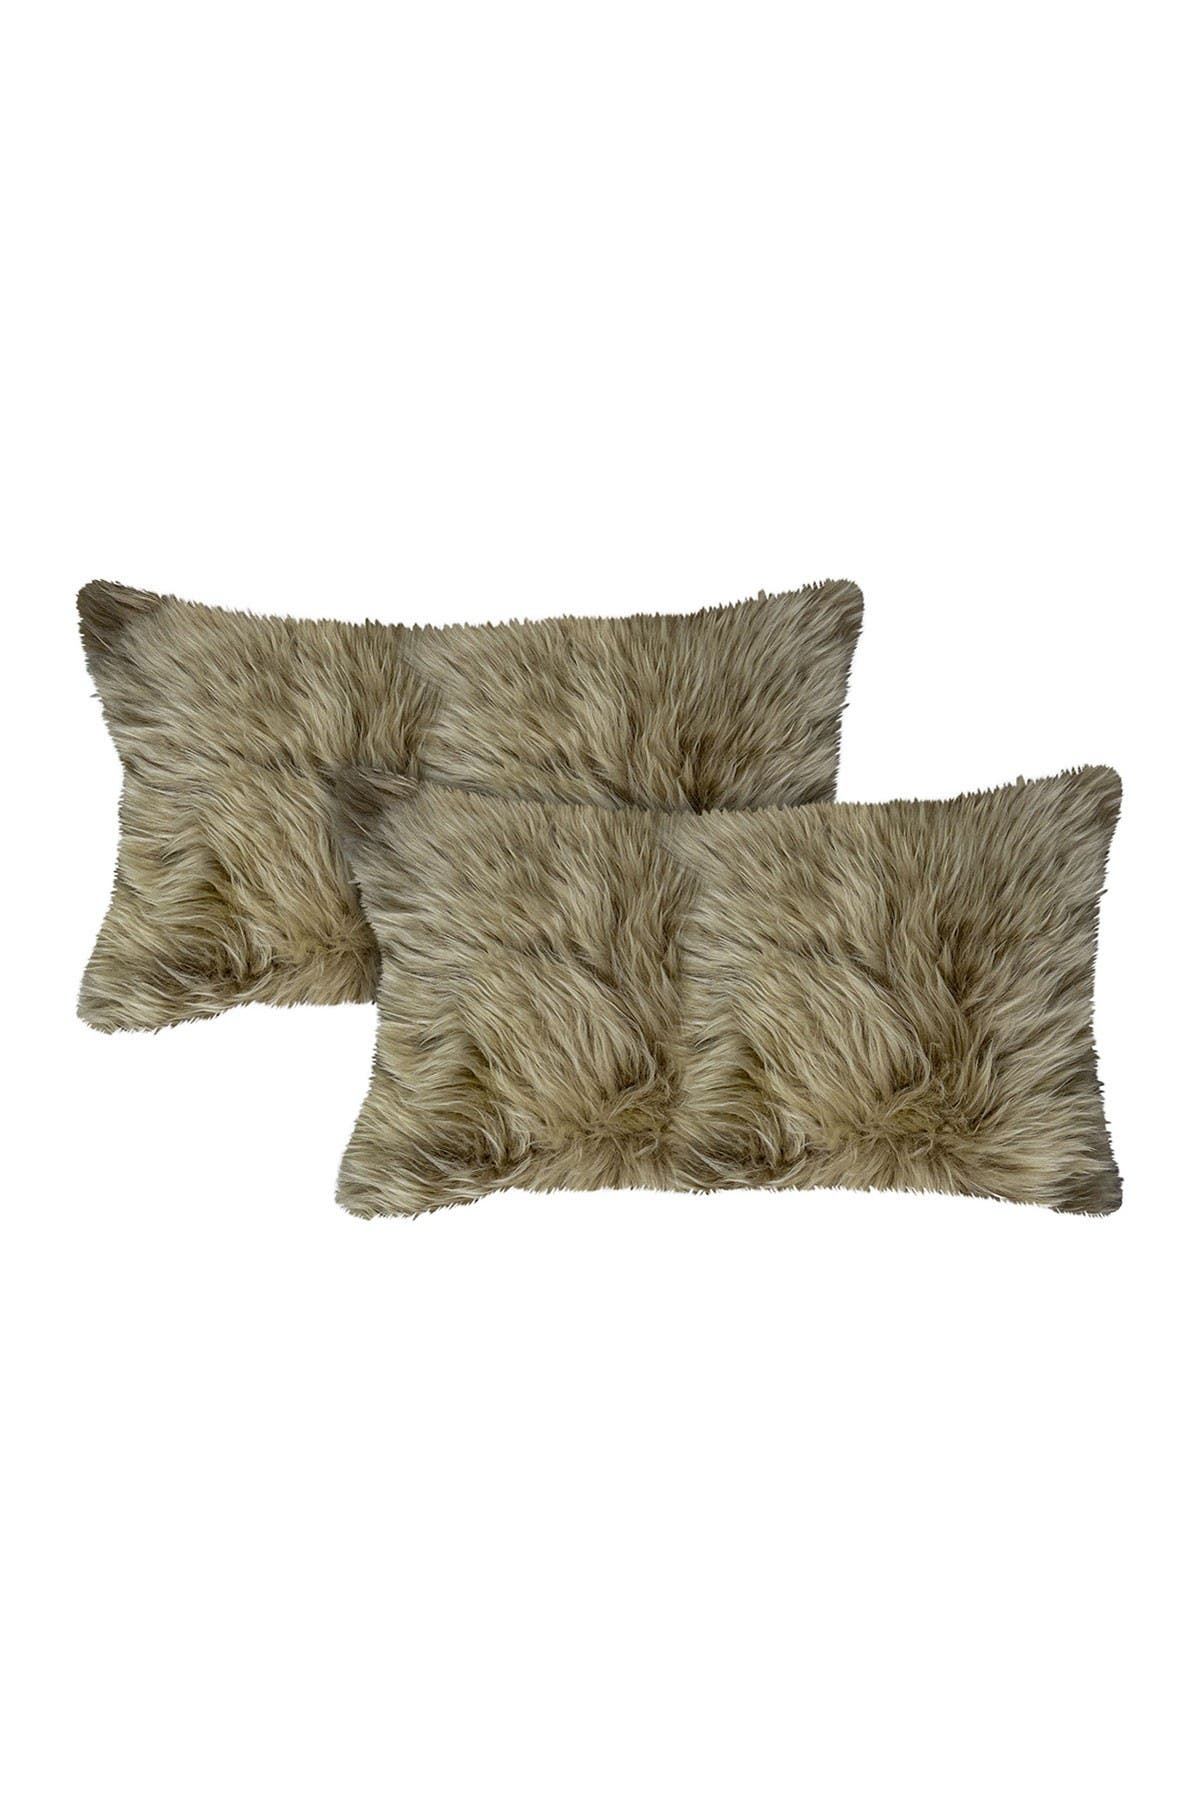 Natural New Zealand Genuine Sheepskin Pillow